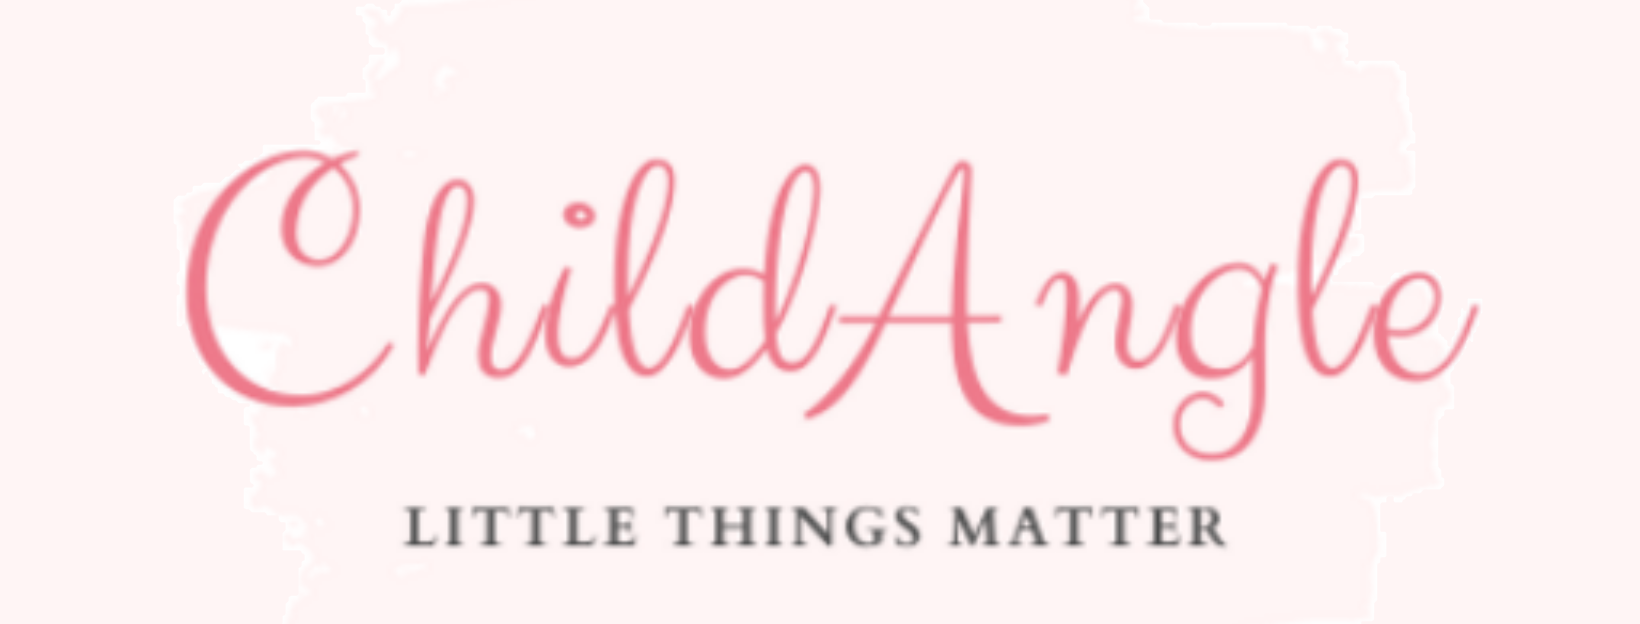 ChildAngle logo